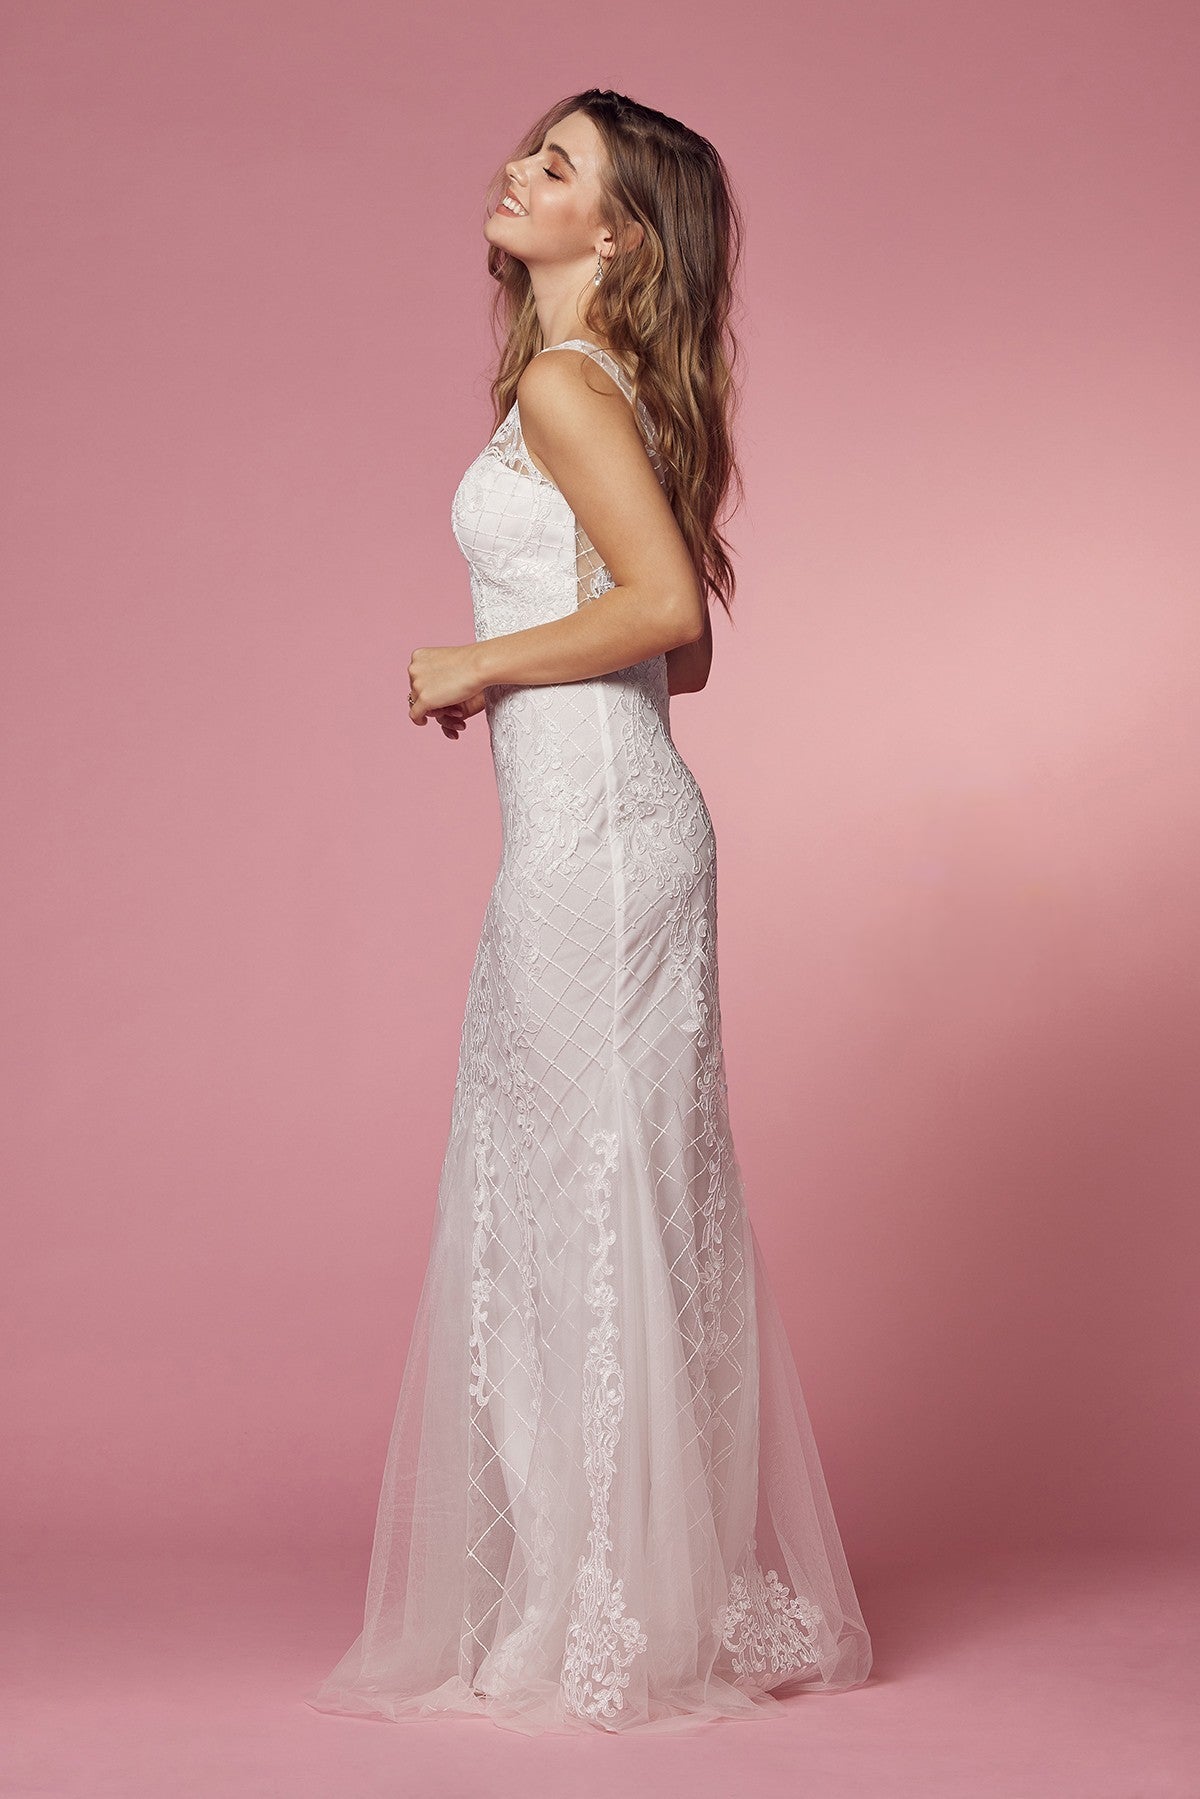 Embroidered Bodice Mermaid Long Wedding Dress NXA398W-Wedding Dress-smcfashion.com